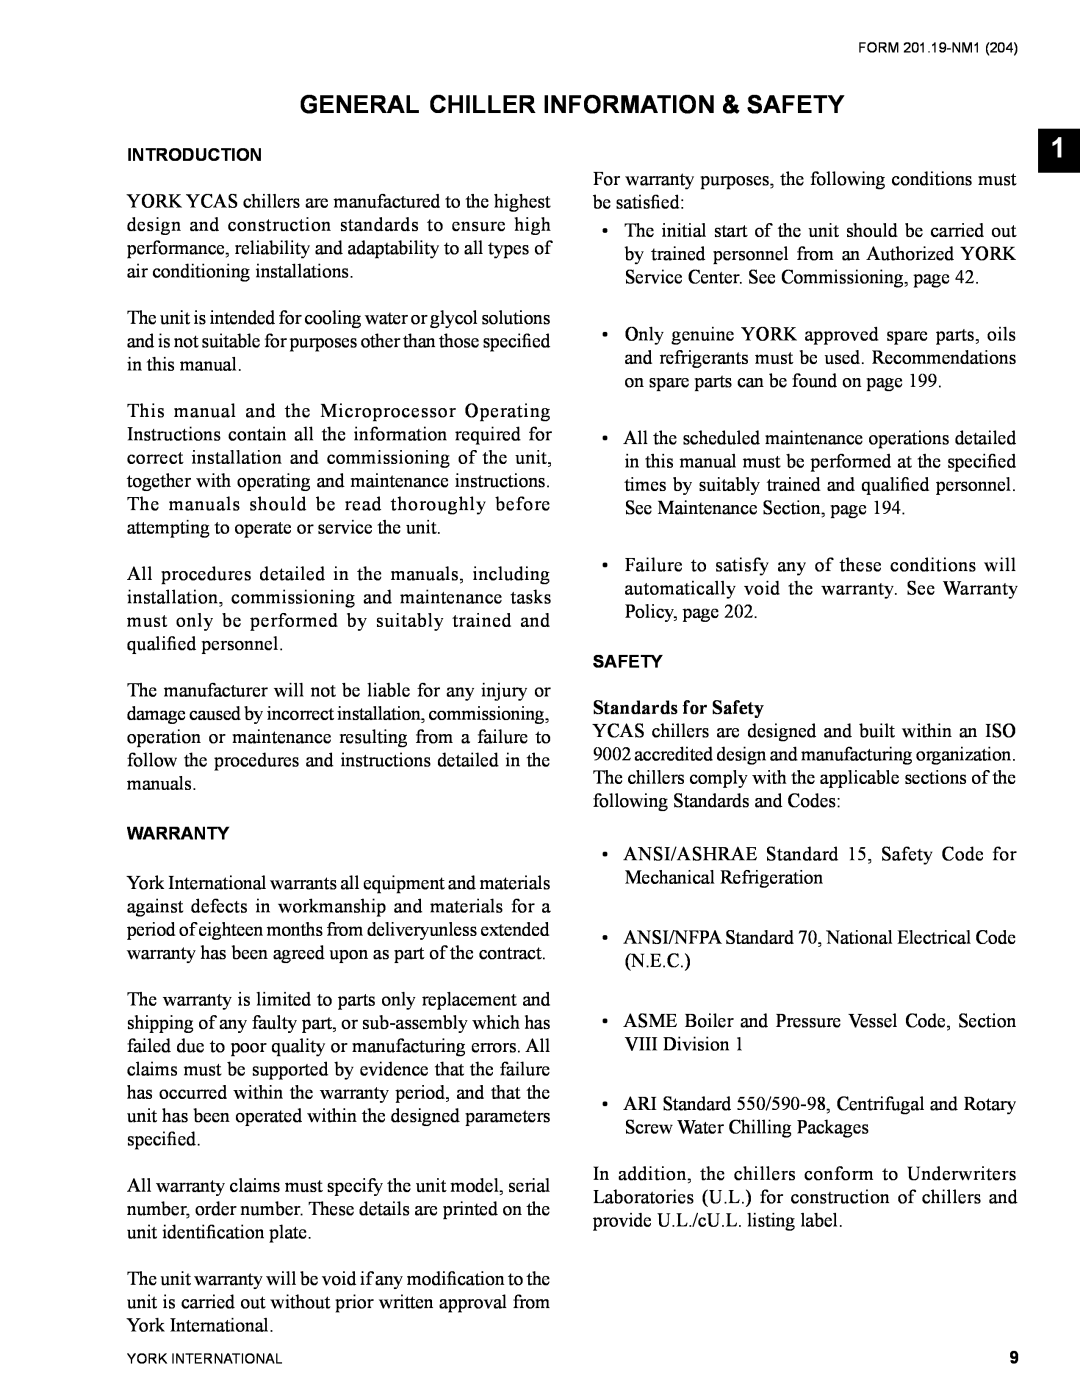 York YCAS0130 manual General Chiller Information & Safety, Standards for Safety 